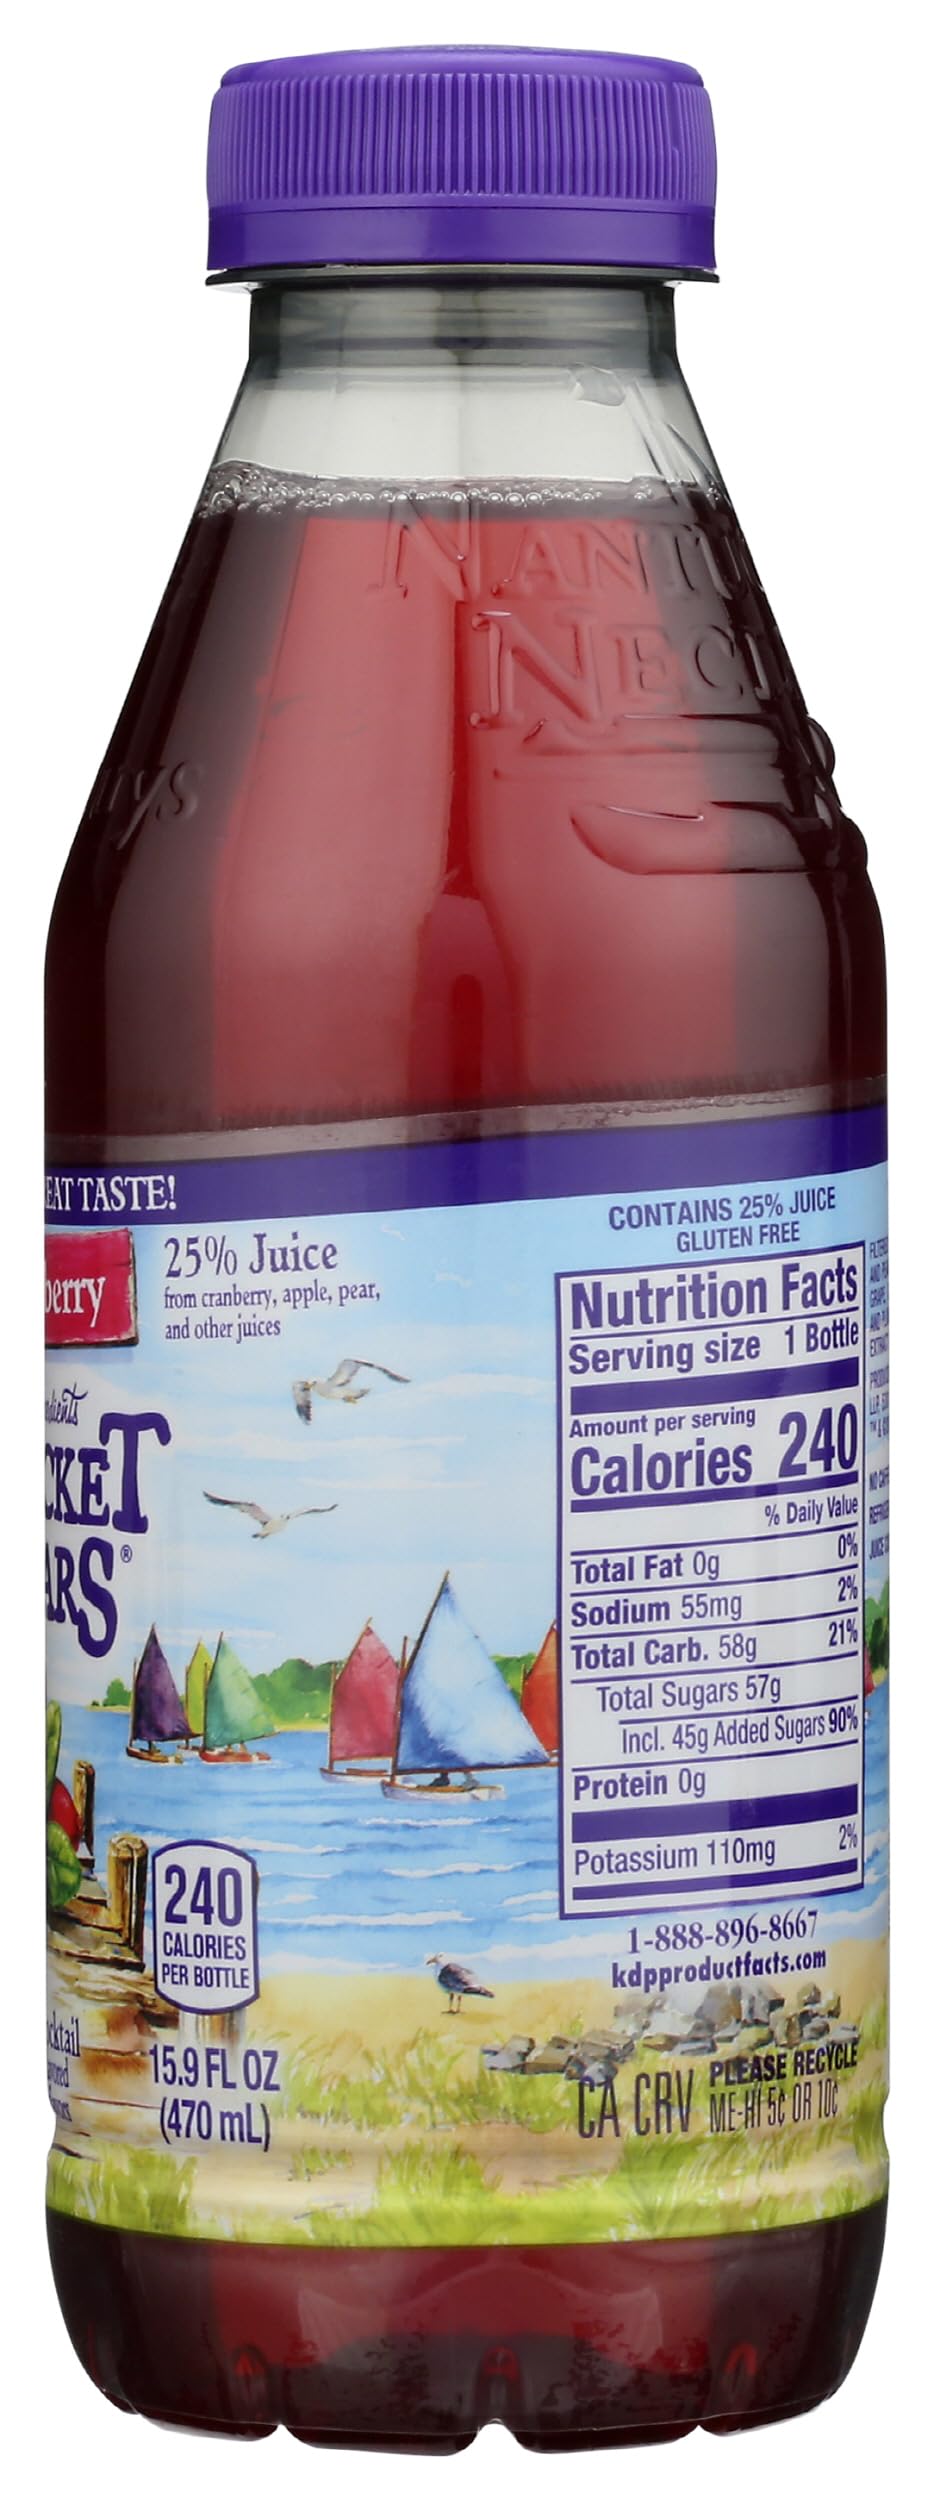 NANTUCKET NECTARS Big Cranberry Juice, 15.9 FZ